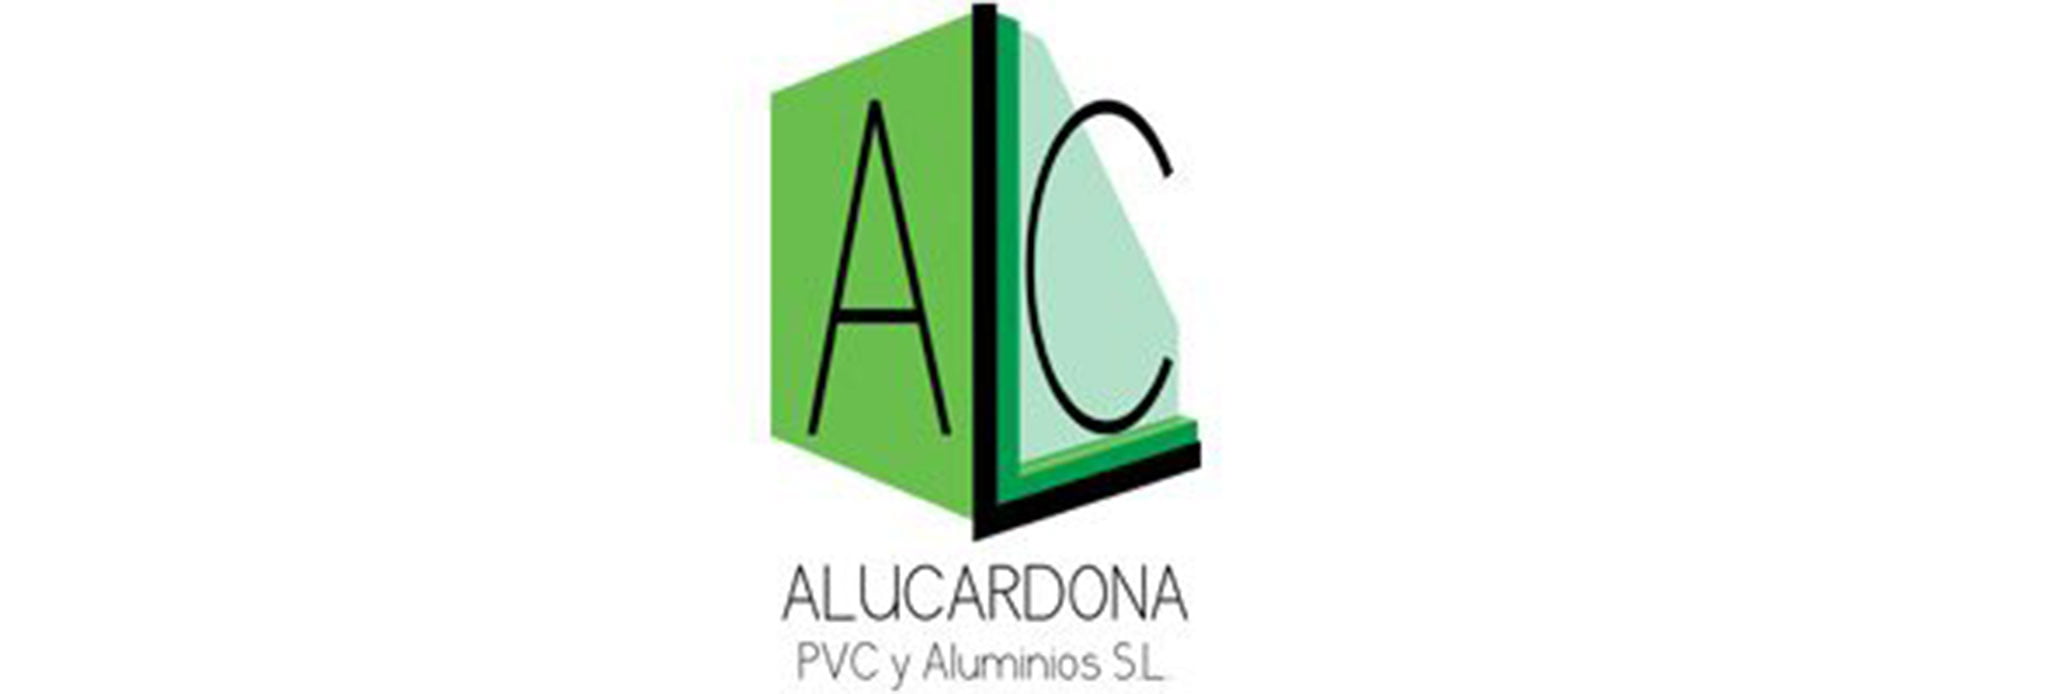 Logotipo de Alucardona PVC y Aluminios SL